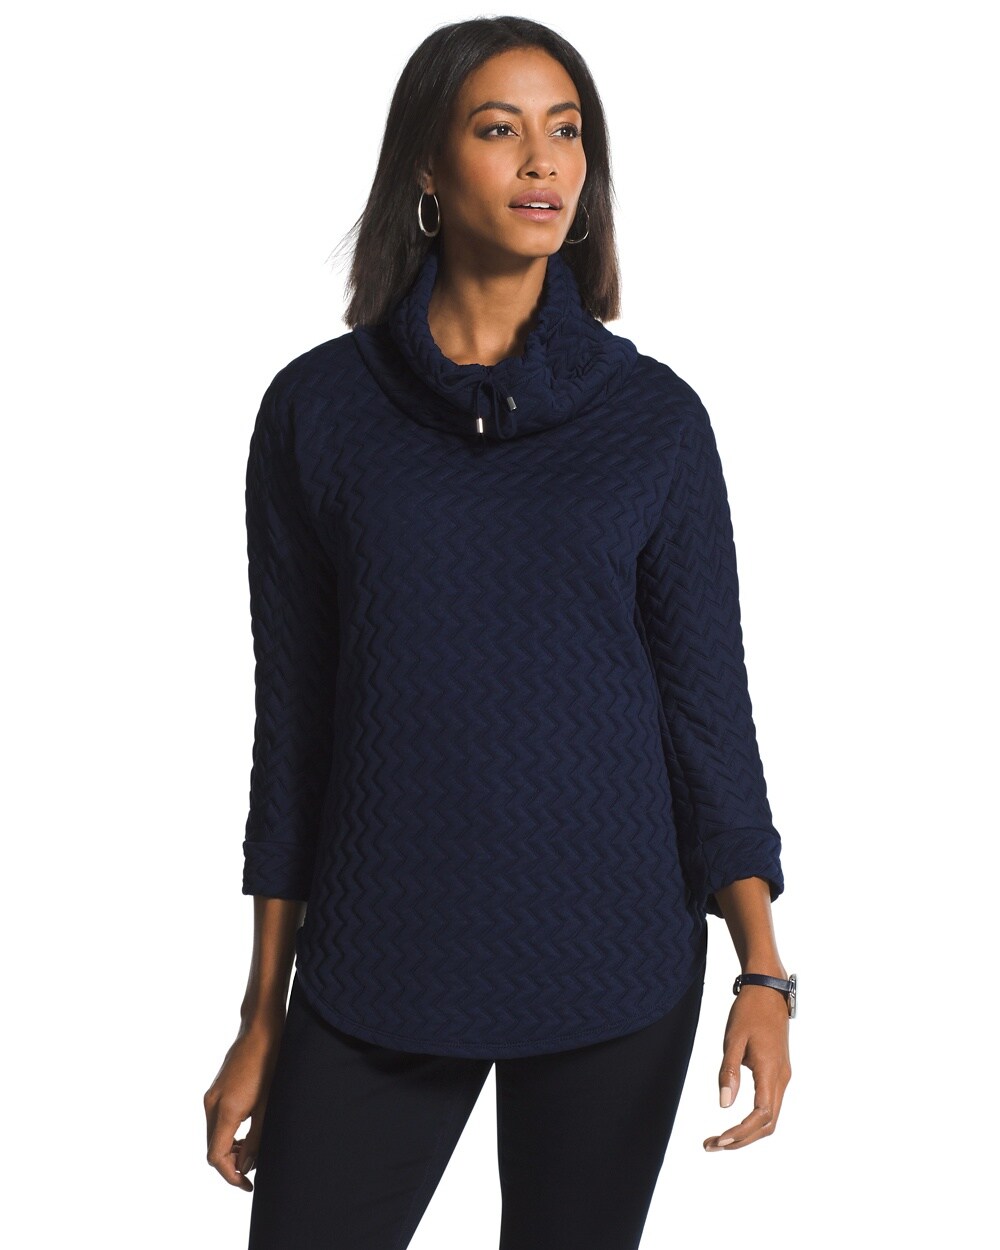 Zenergy Fabianne Textured Navy Sweater